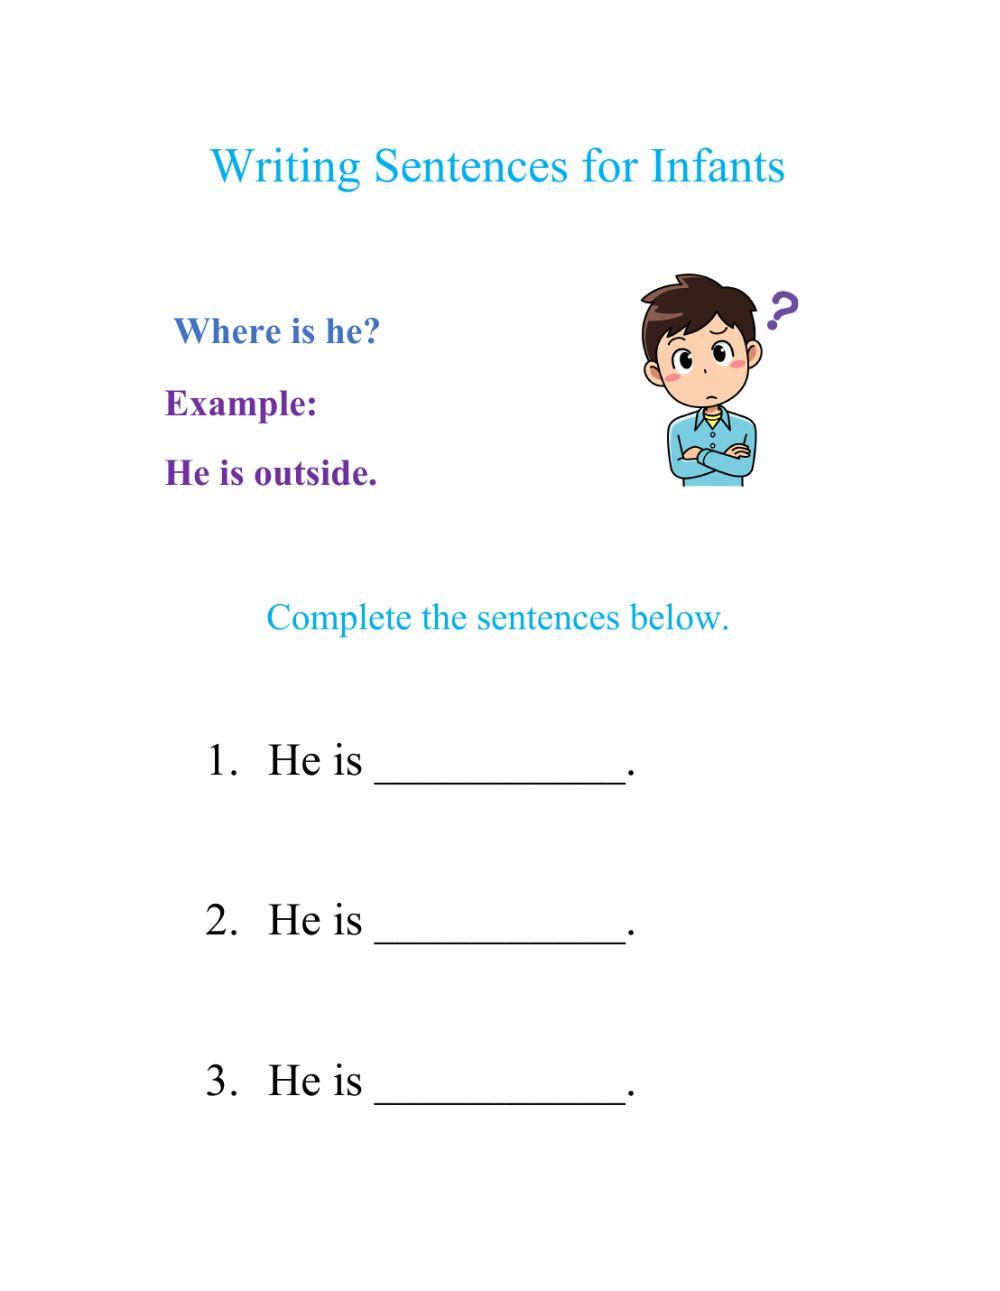 Writing Sentences He is